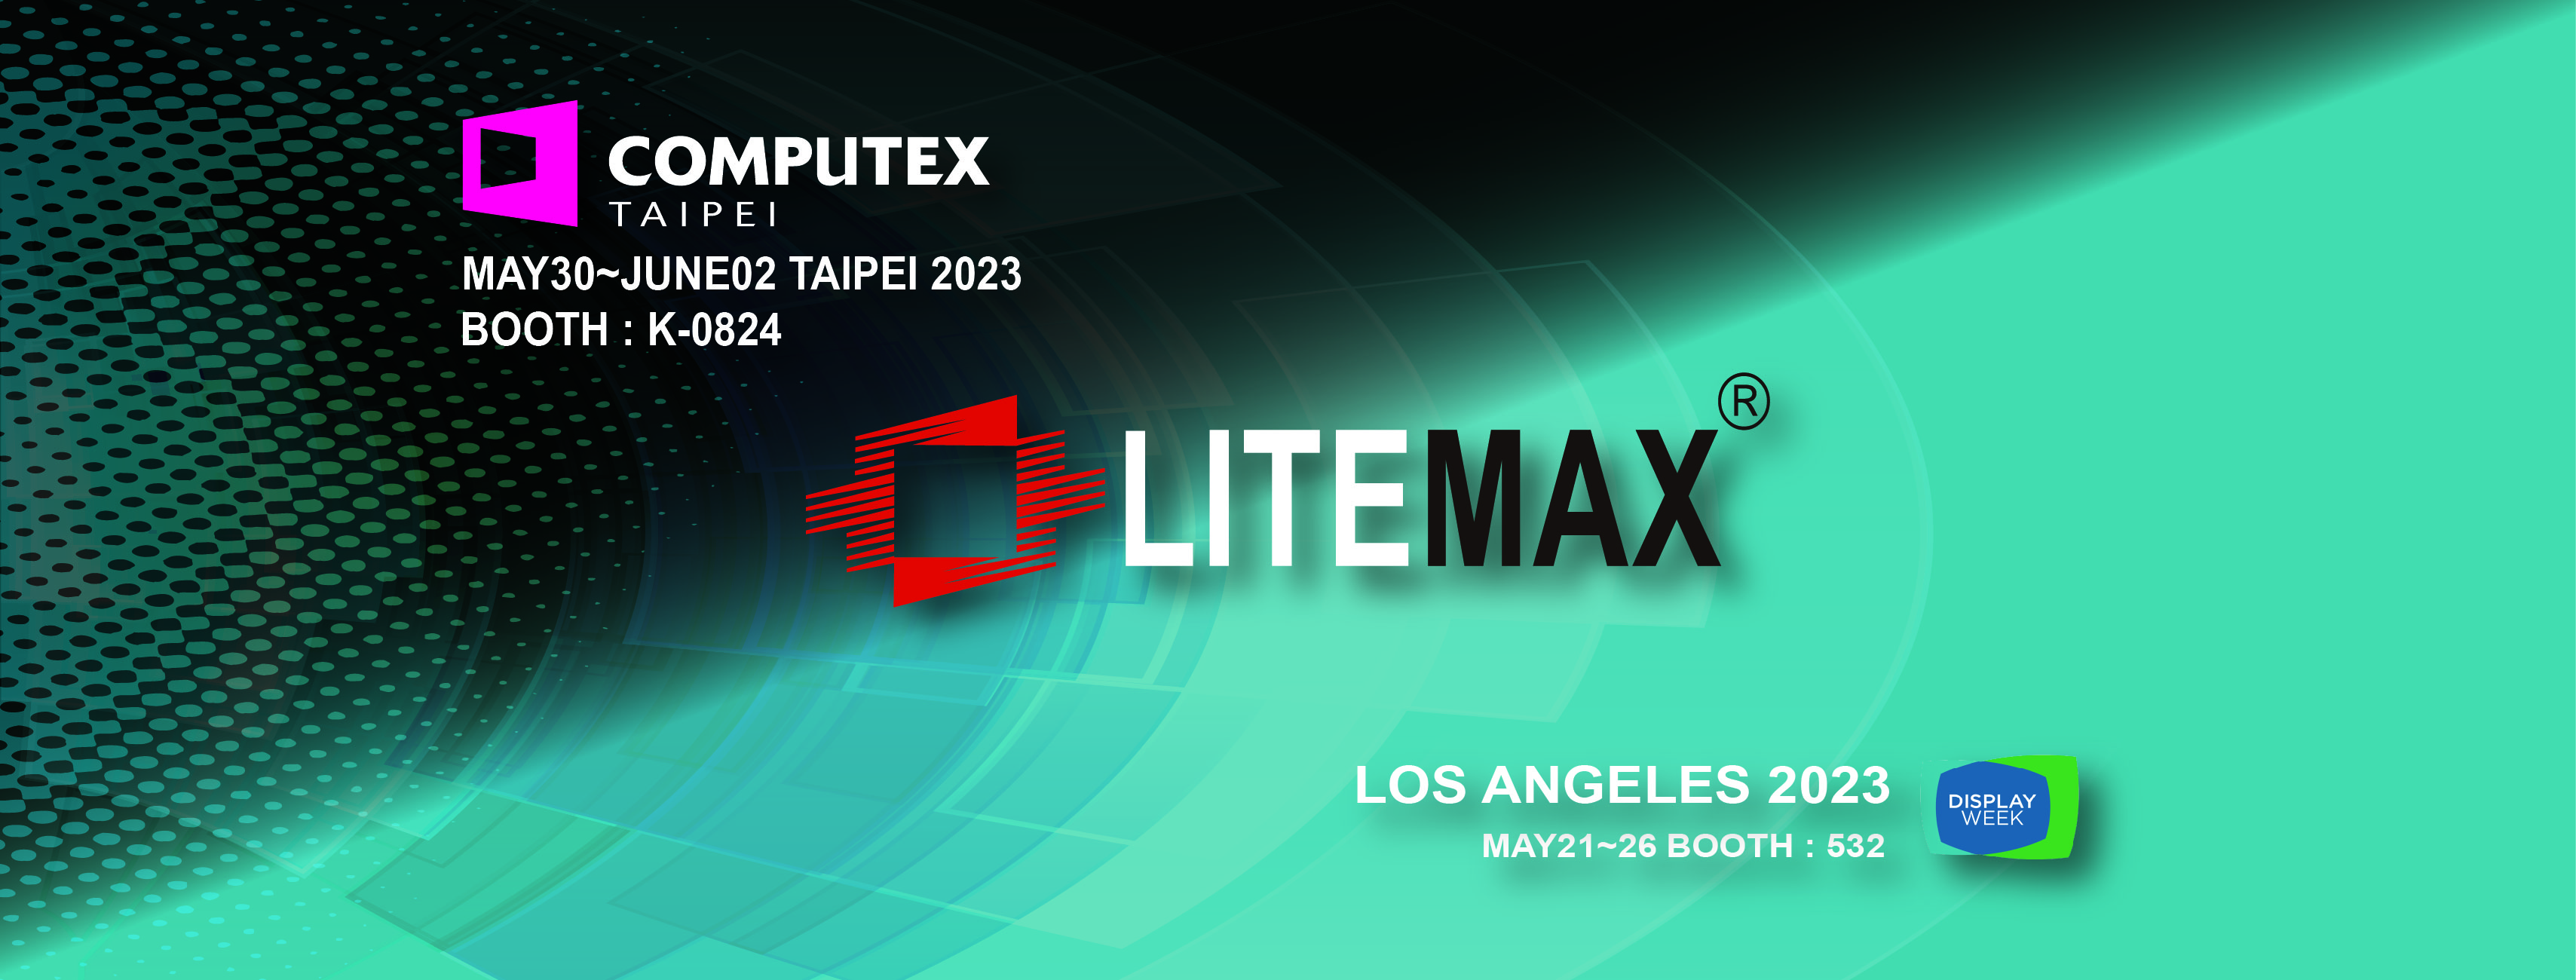 LITEMAXは、COMPUTEXとDisplay Weekであなたにお会いできることを楽しみにしています。